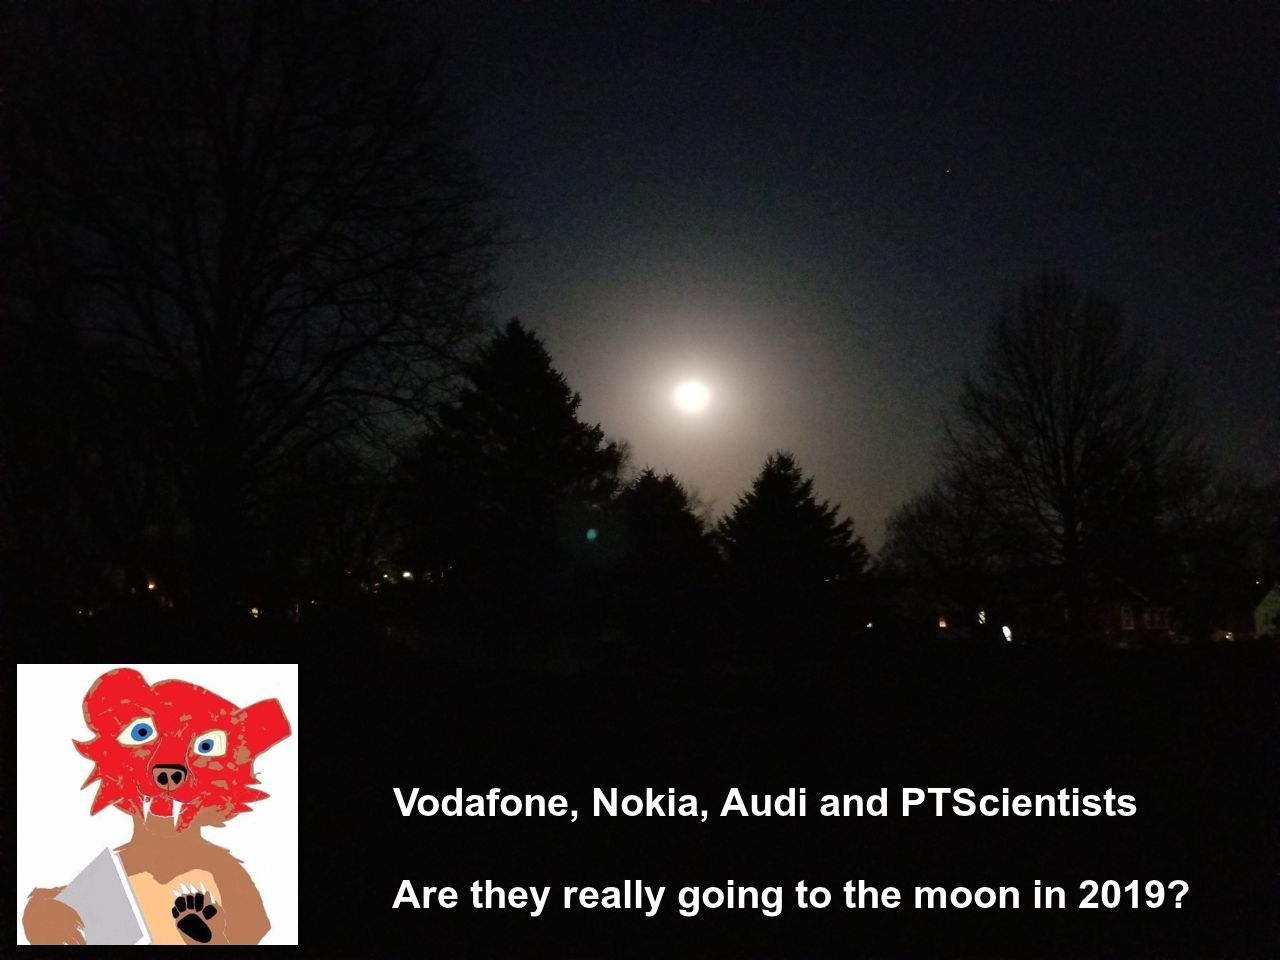 vodafone-nokia-audi-ptscientists-moon-mission-2018-2019-luke-nandibear-and-image-credit-night-sky-with-moon-captured-april-29-2018-at-9:03-pm-by-luke-nandibear